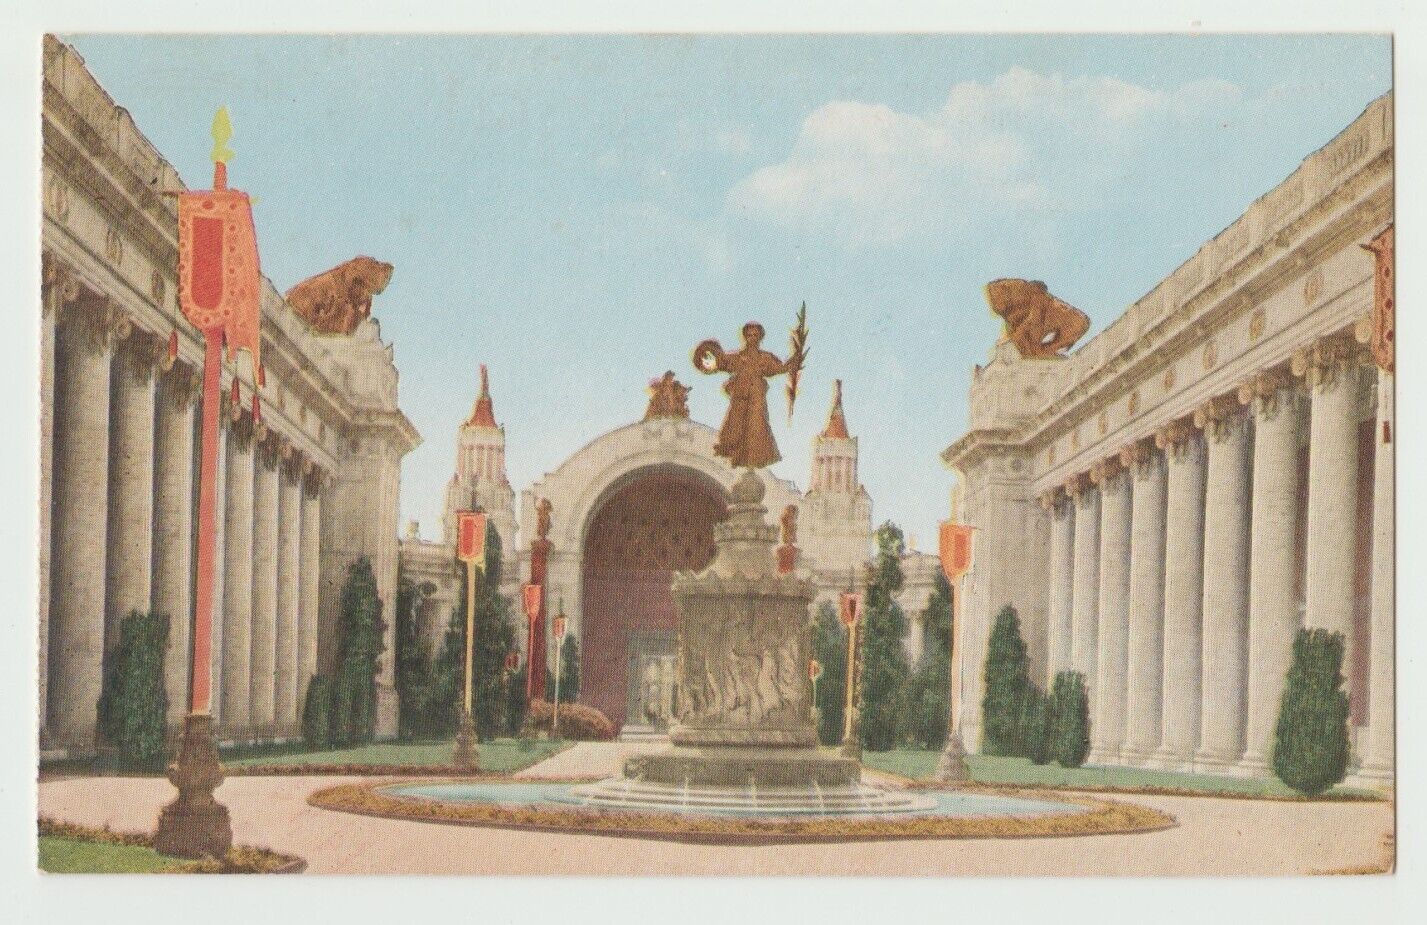 California, San Francisco, Pan Pacific Expo., Court of the four Seasons.